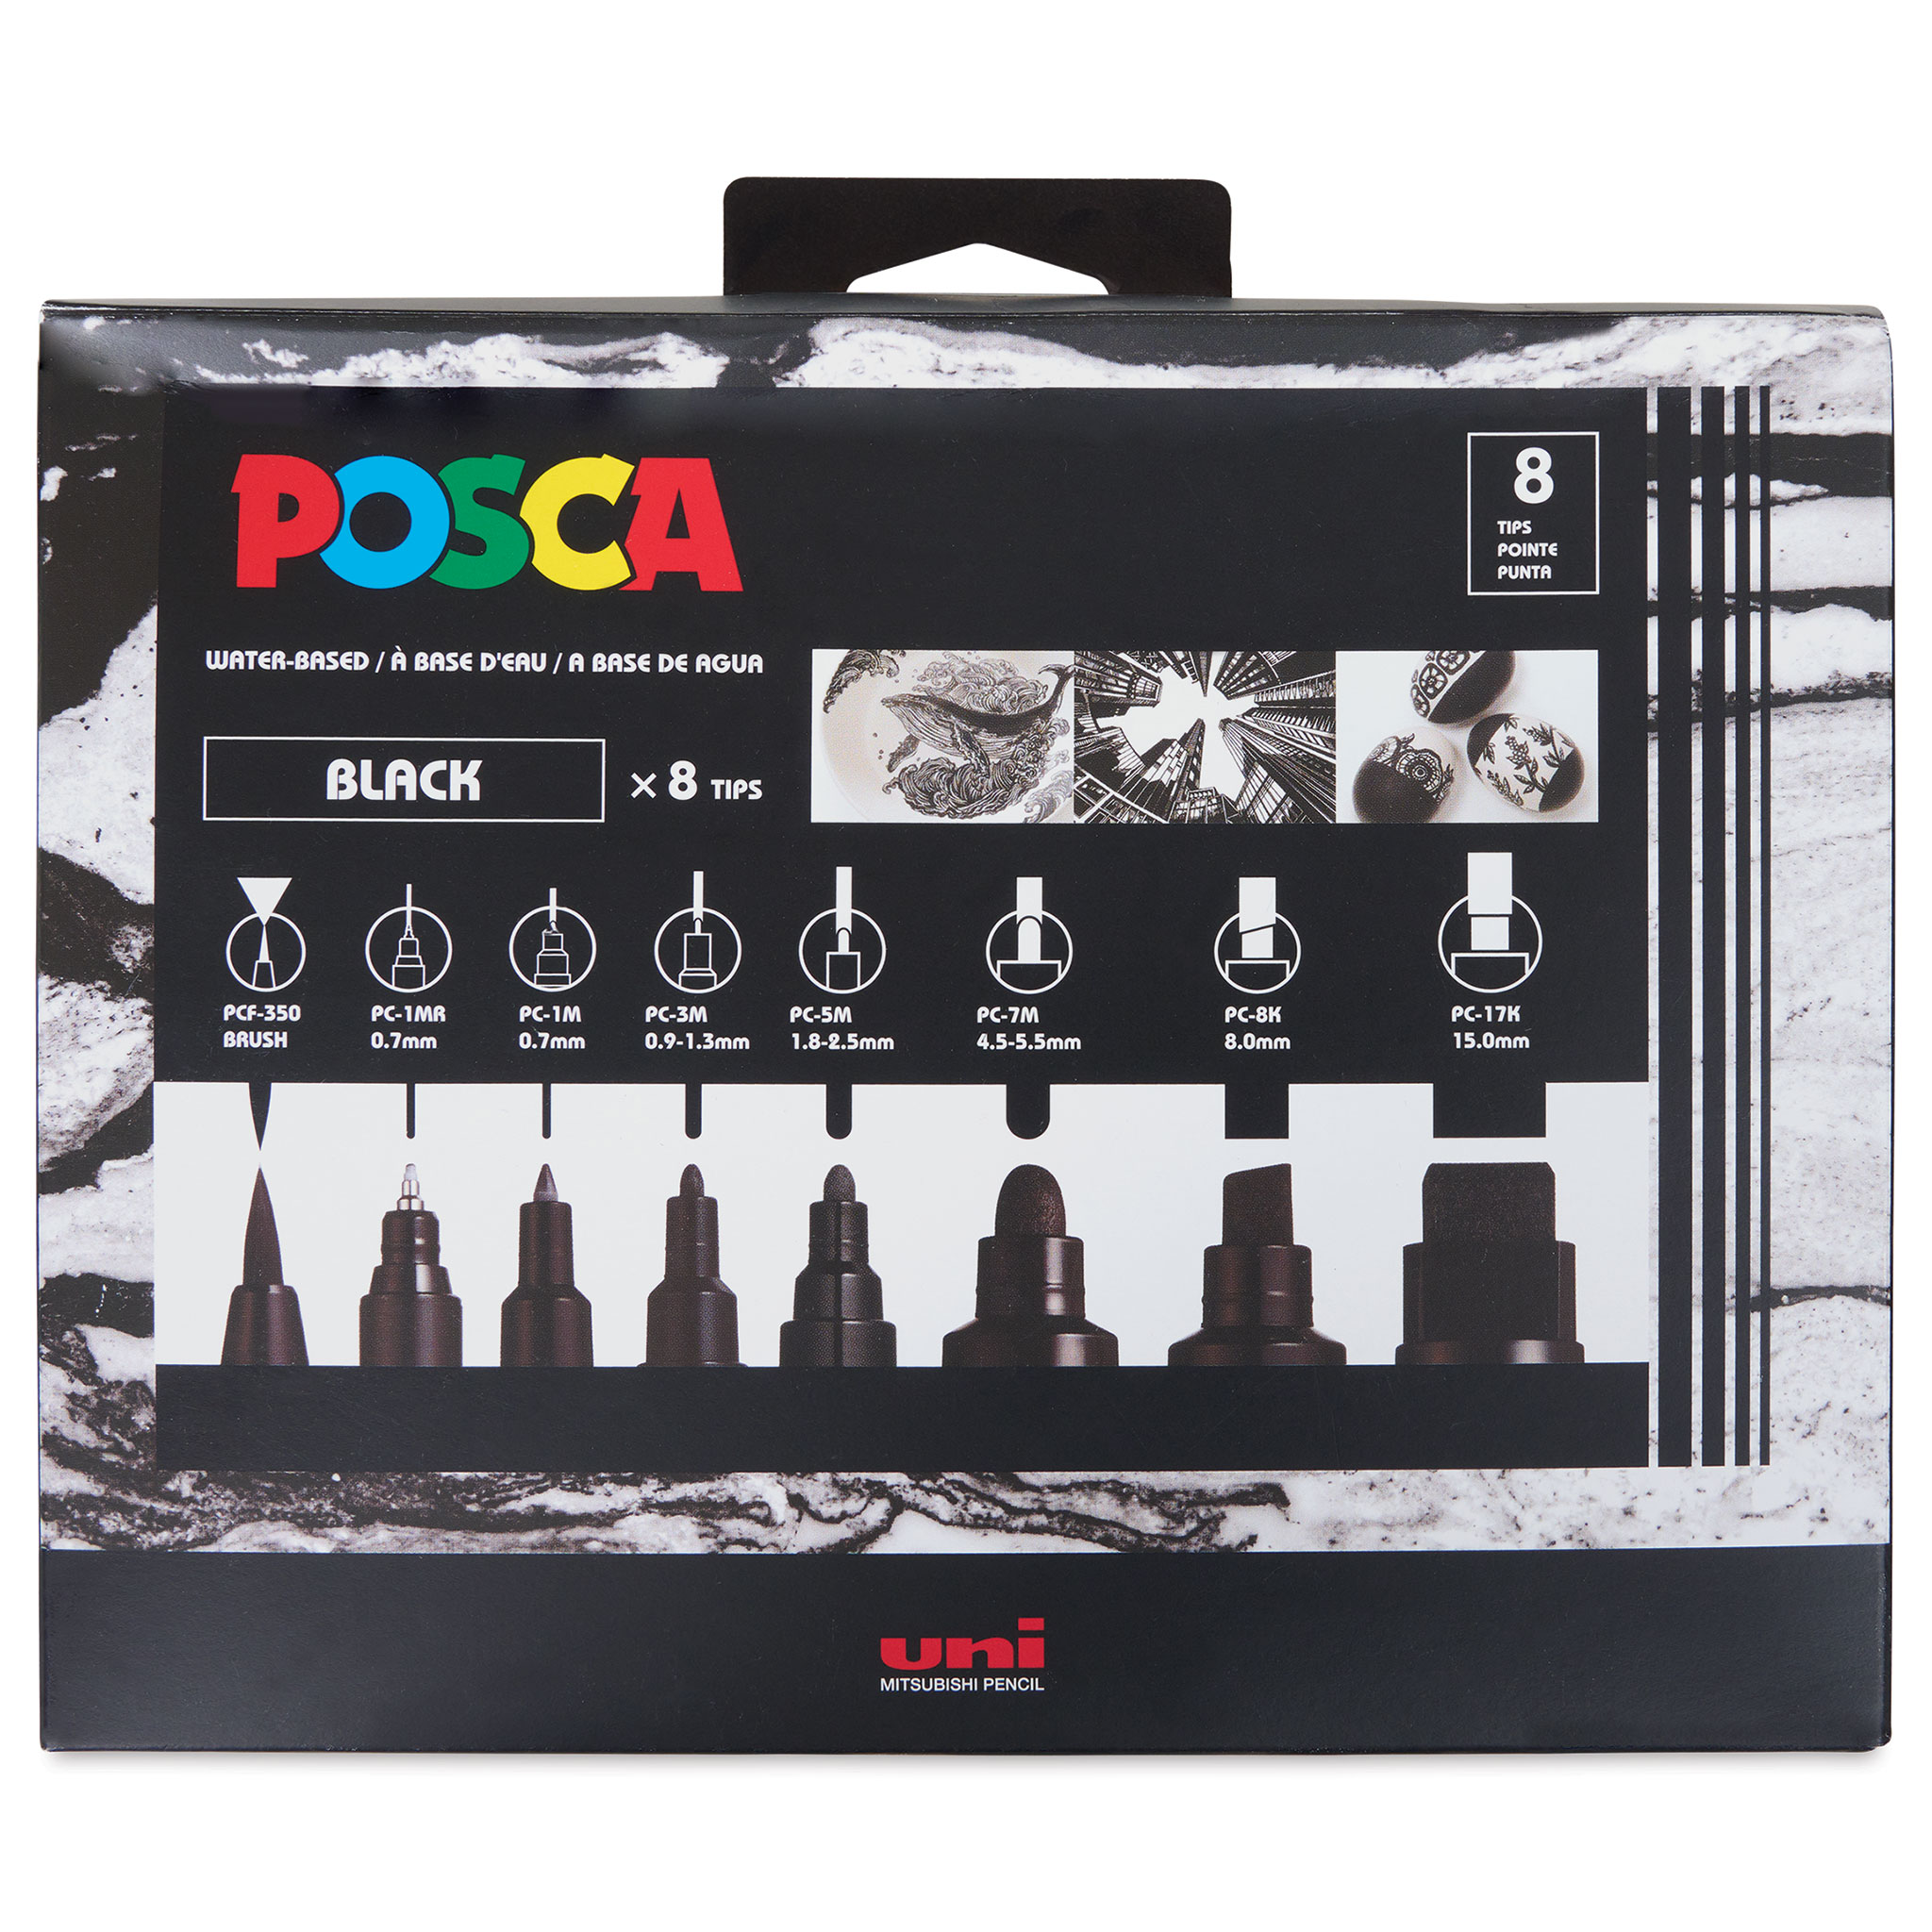 POSCA - Posca pointe fine blanc - rose - bleu clair - vert foncé x4 -  Supermarchés Match